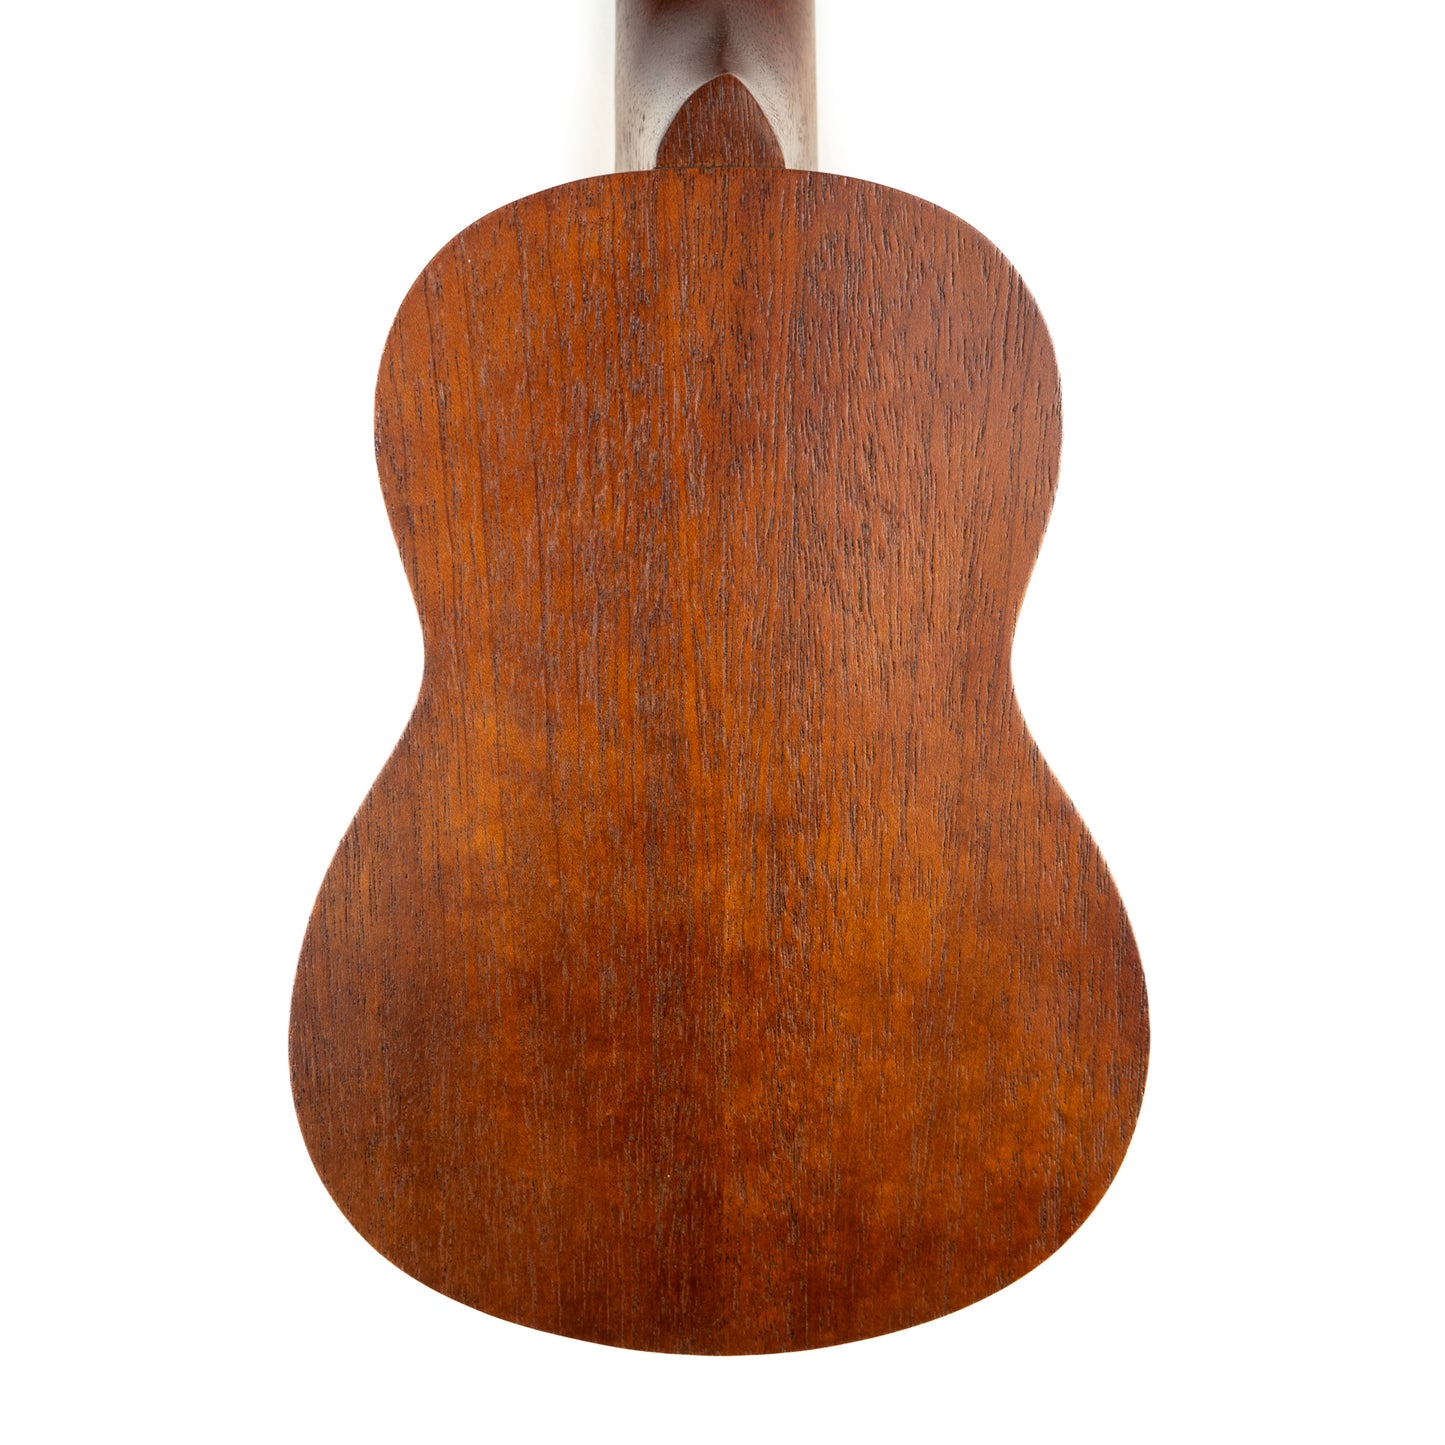 Kala satin mahogany long neck soprano ukulele